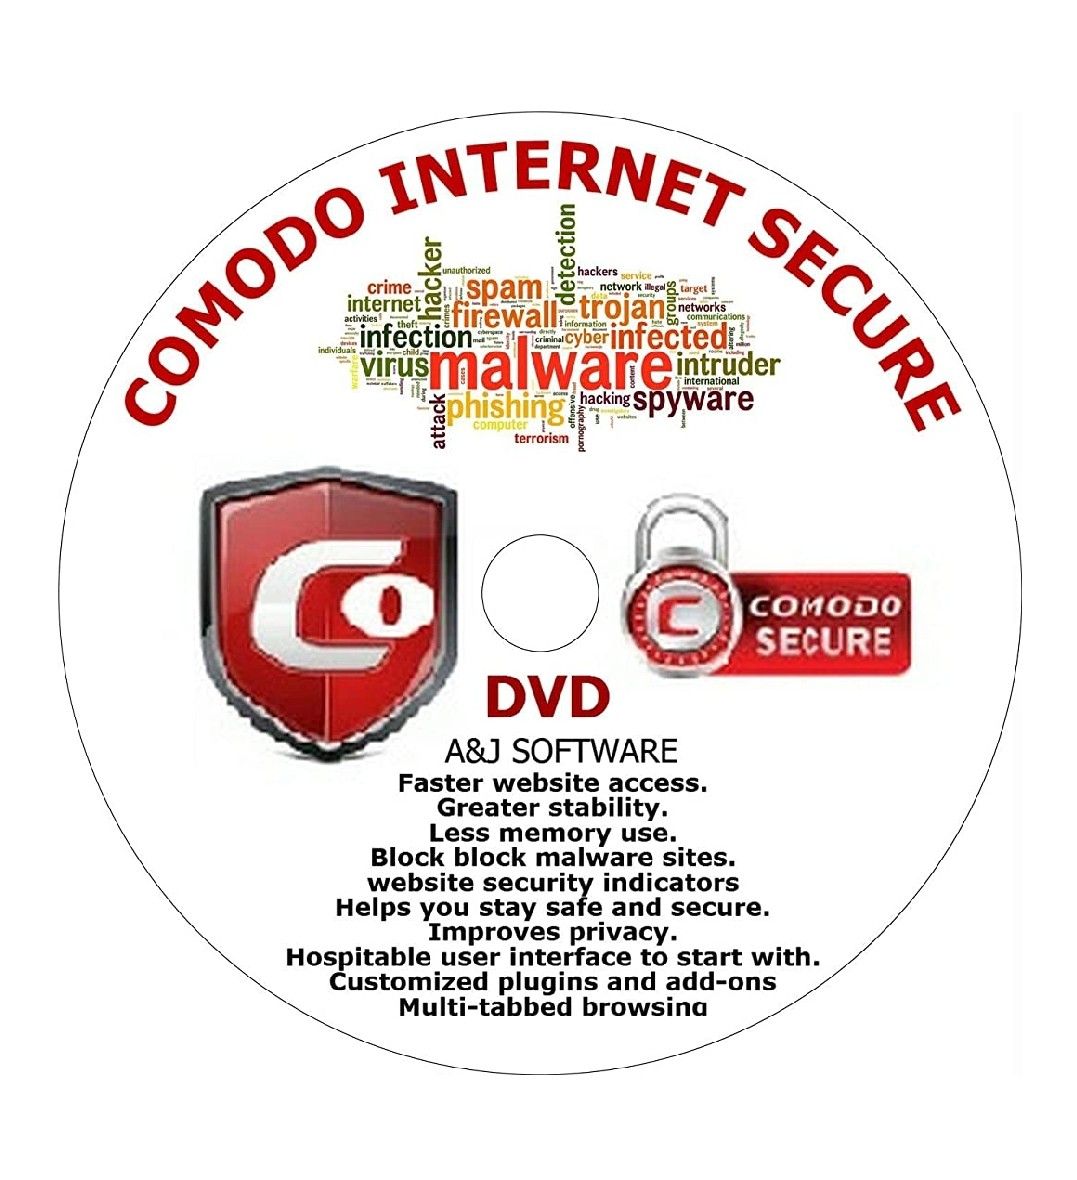 INTERNET SECURITY COMODO.POWERFUL TOOL.Defends against viruses, spyware, and online threats. Antivirus, Firewall, Sandbox ,Host intrusion prevention